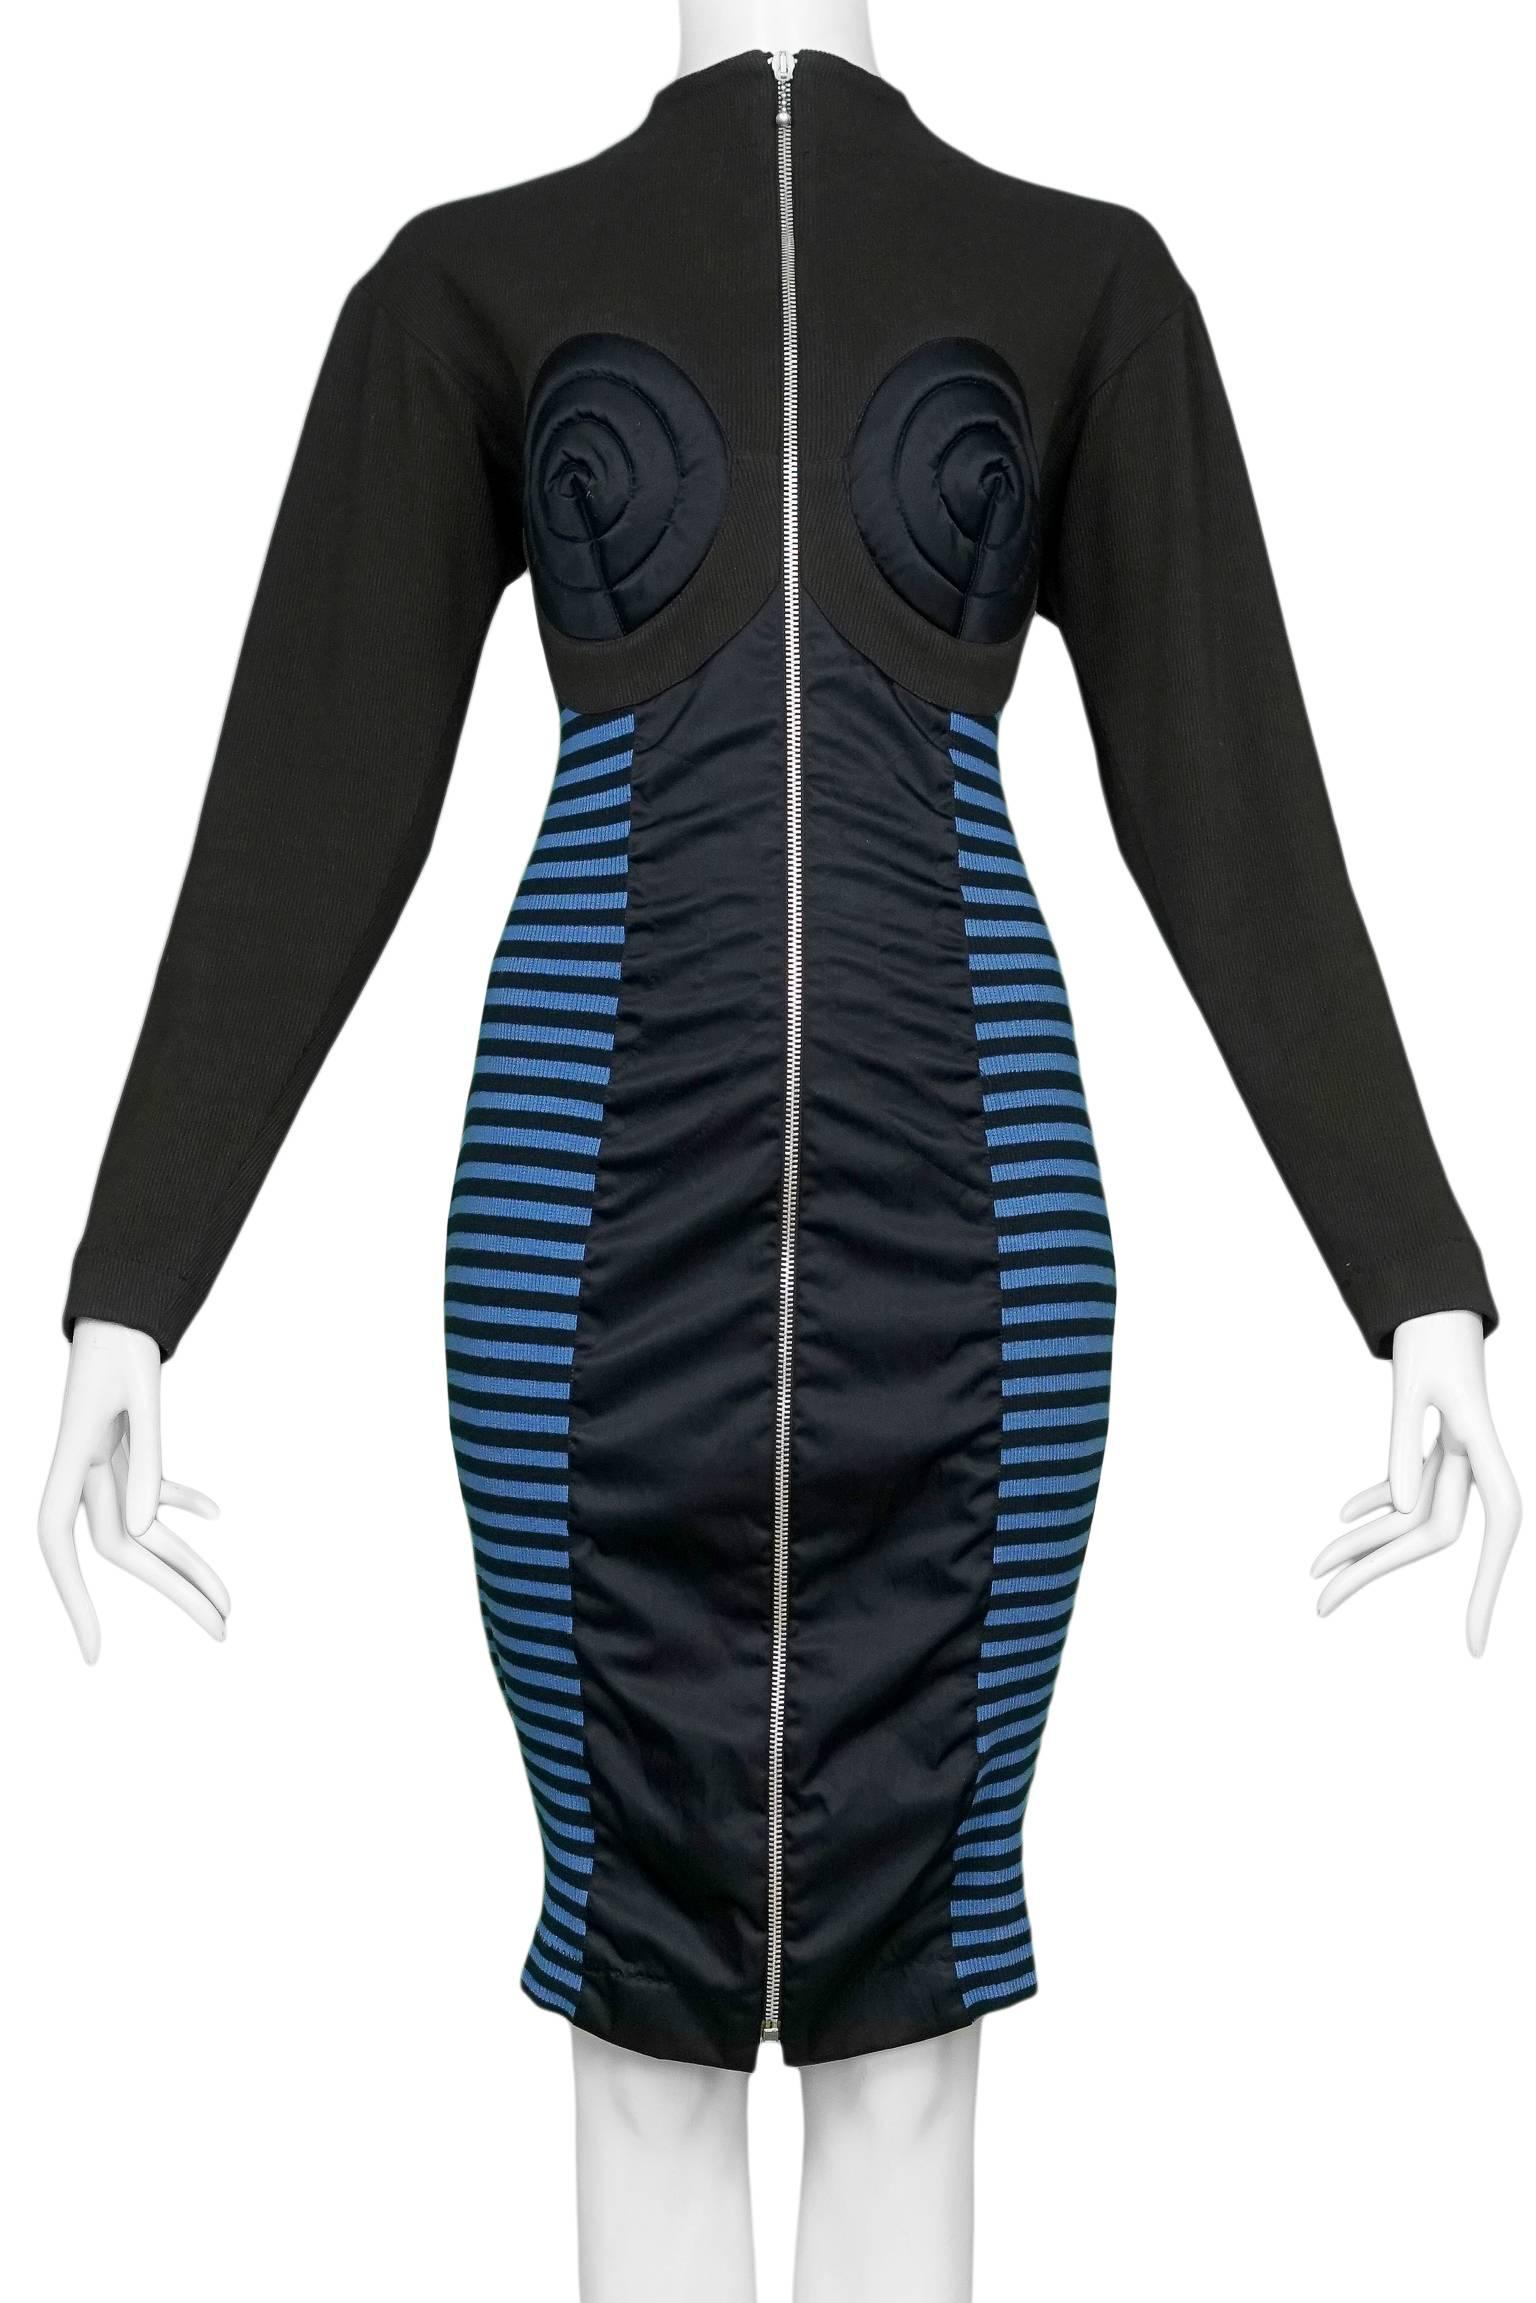 Black Jean Paul Gaultier Iconic Russian Constructivist Bustier Dress 